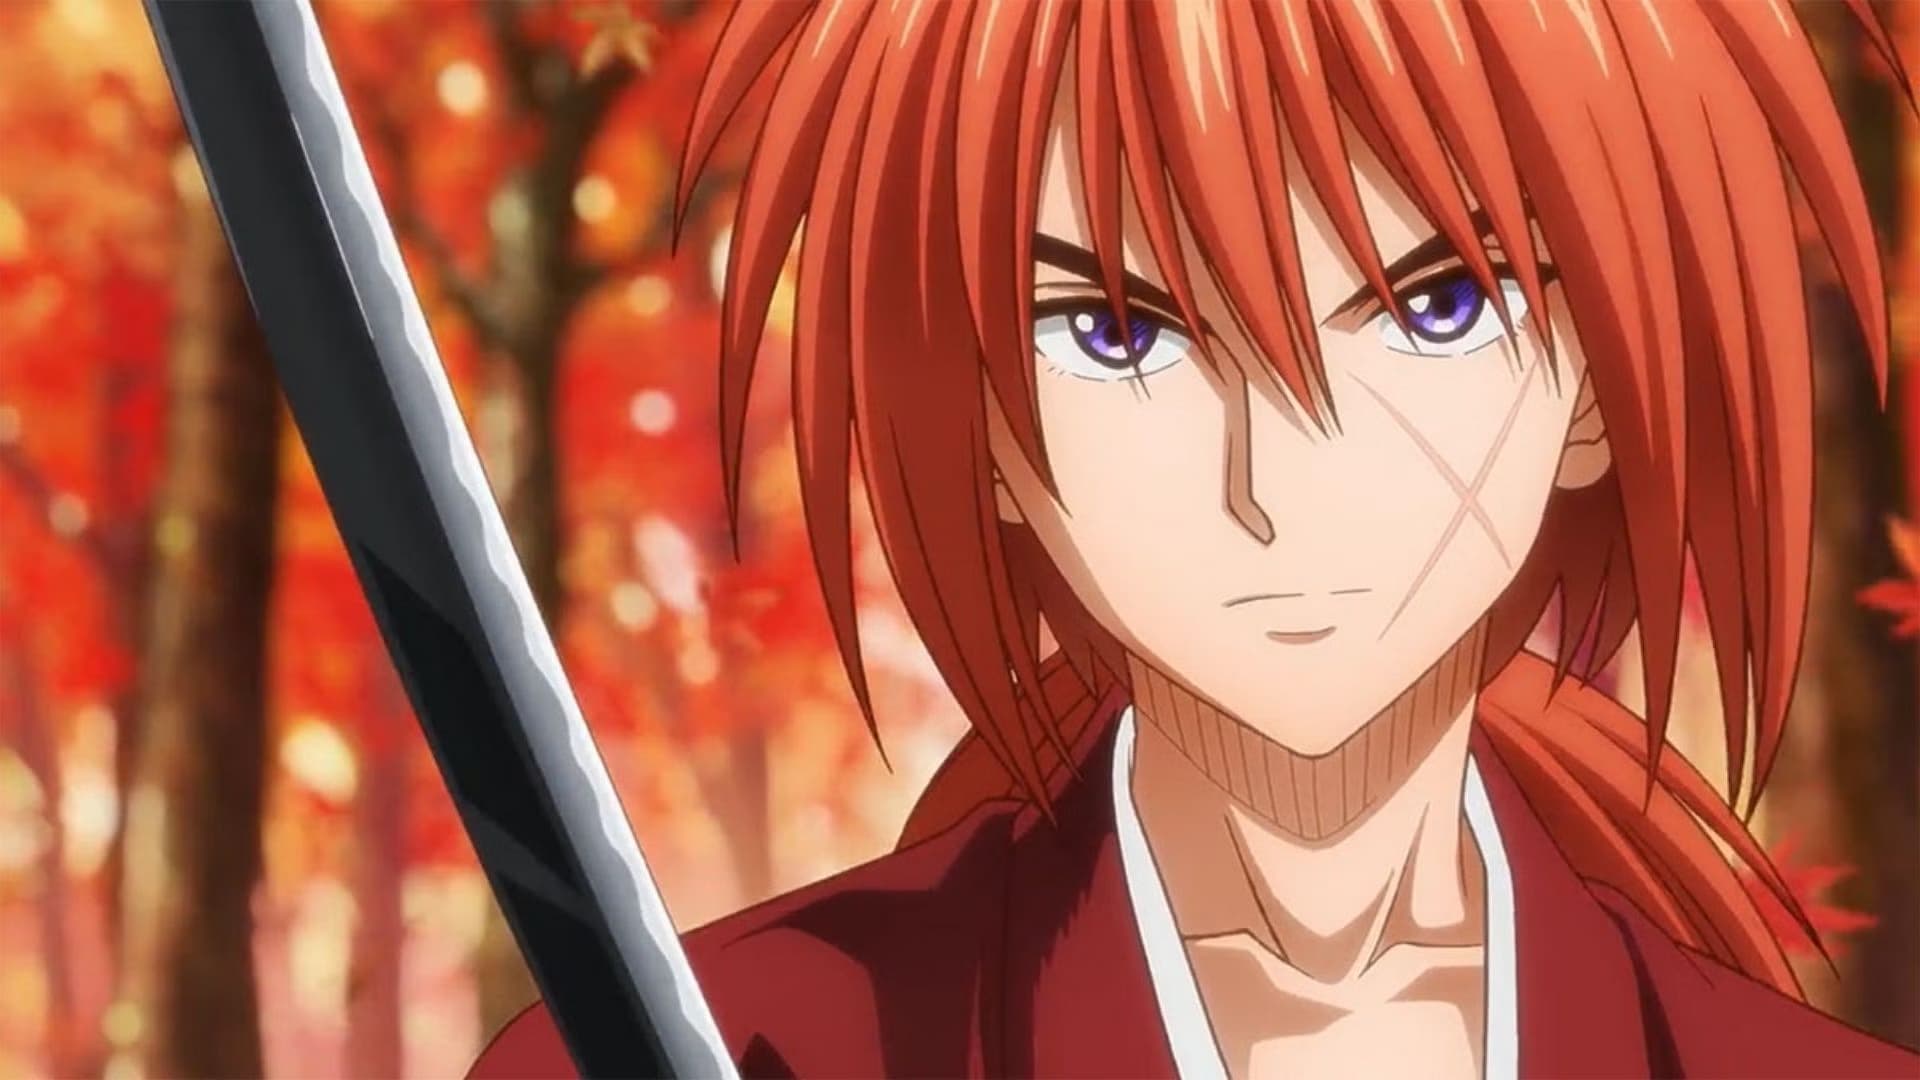 Trailer Resmi Anime Rurouni Kenshin, Lihat di Sini!